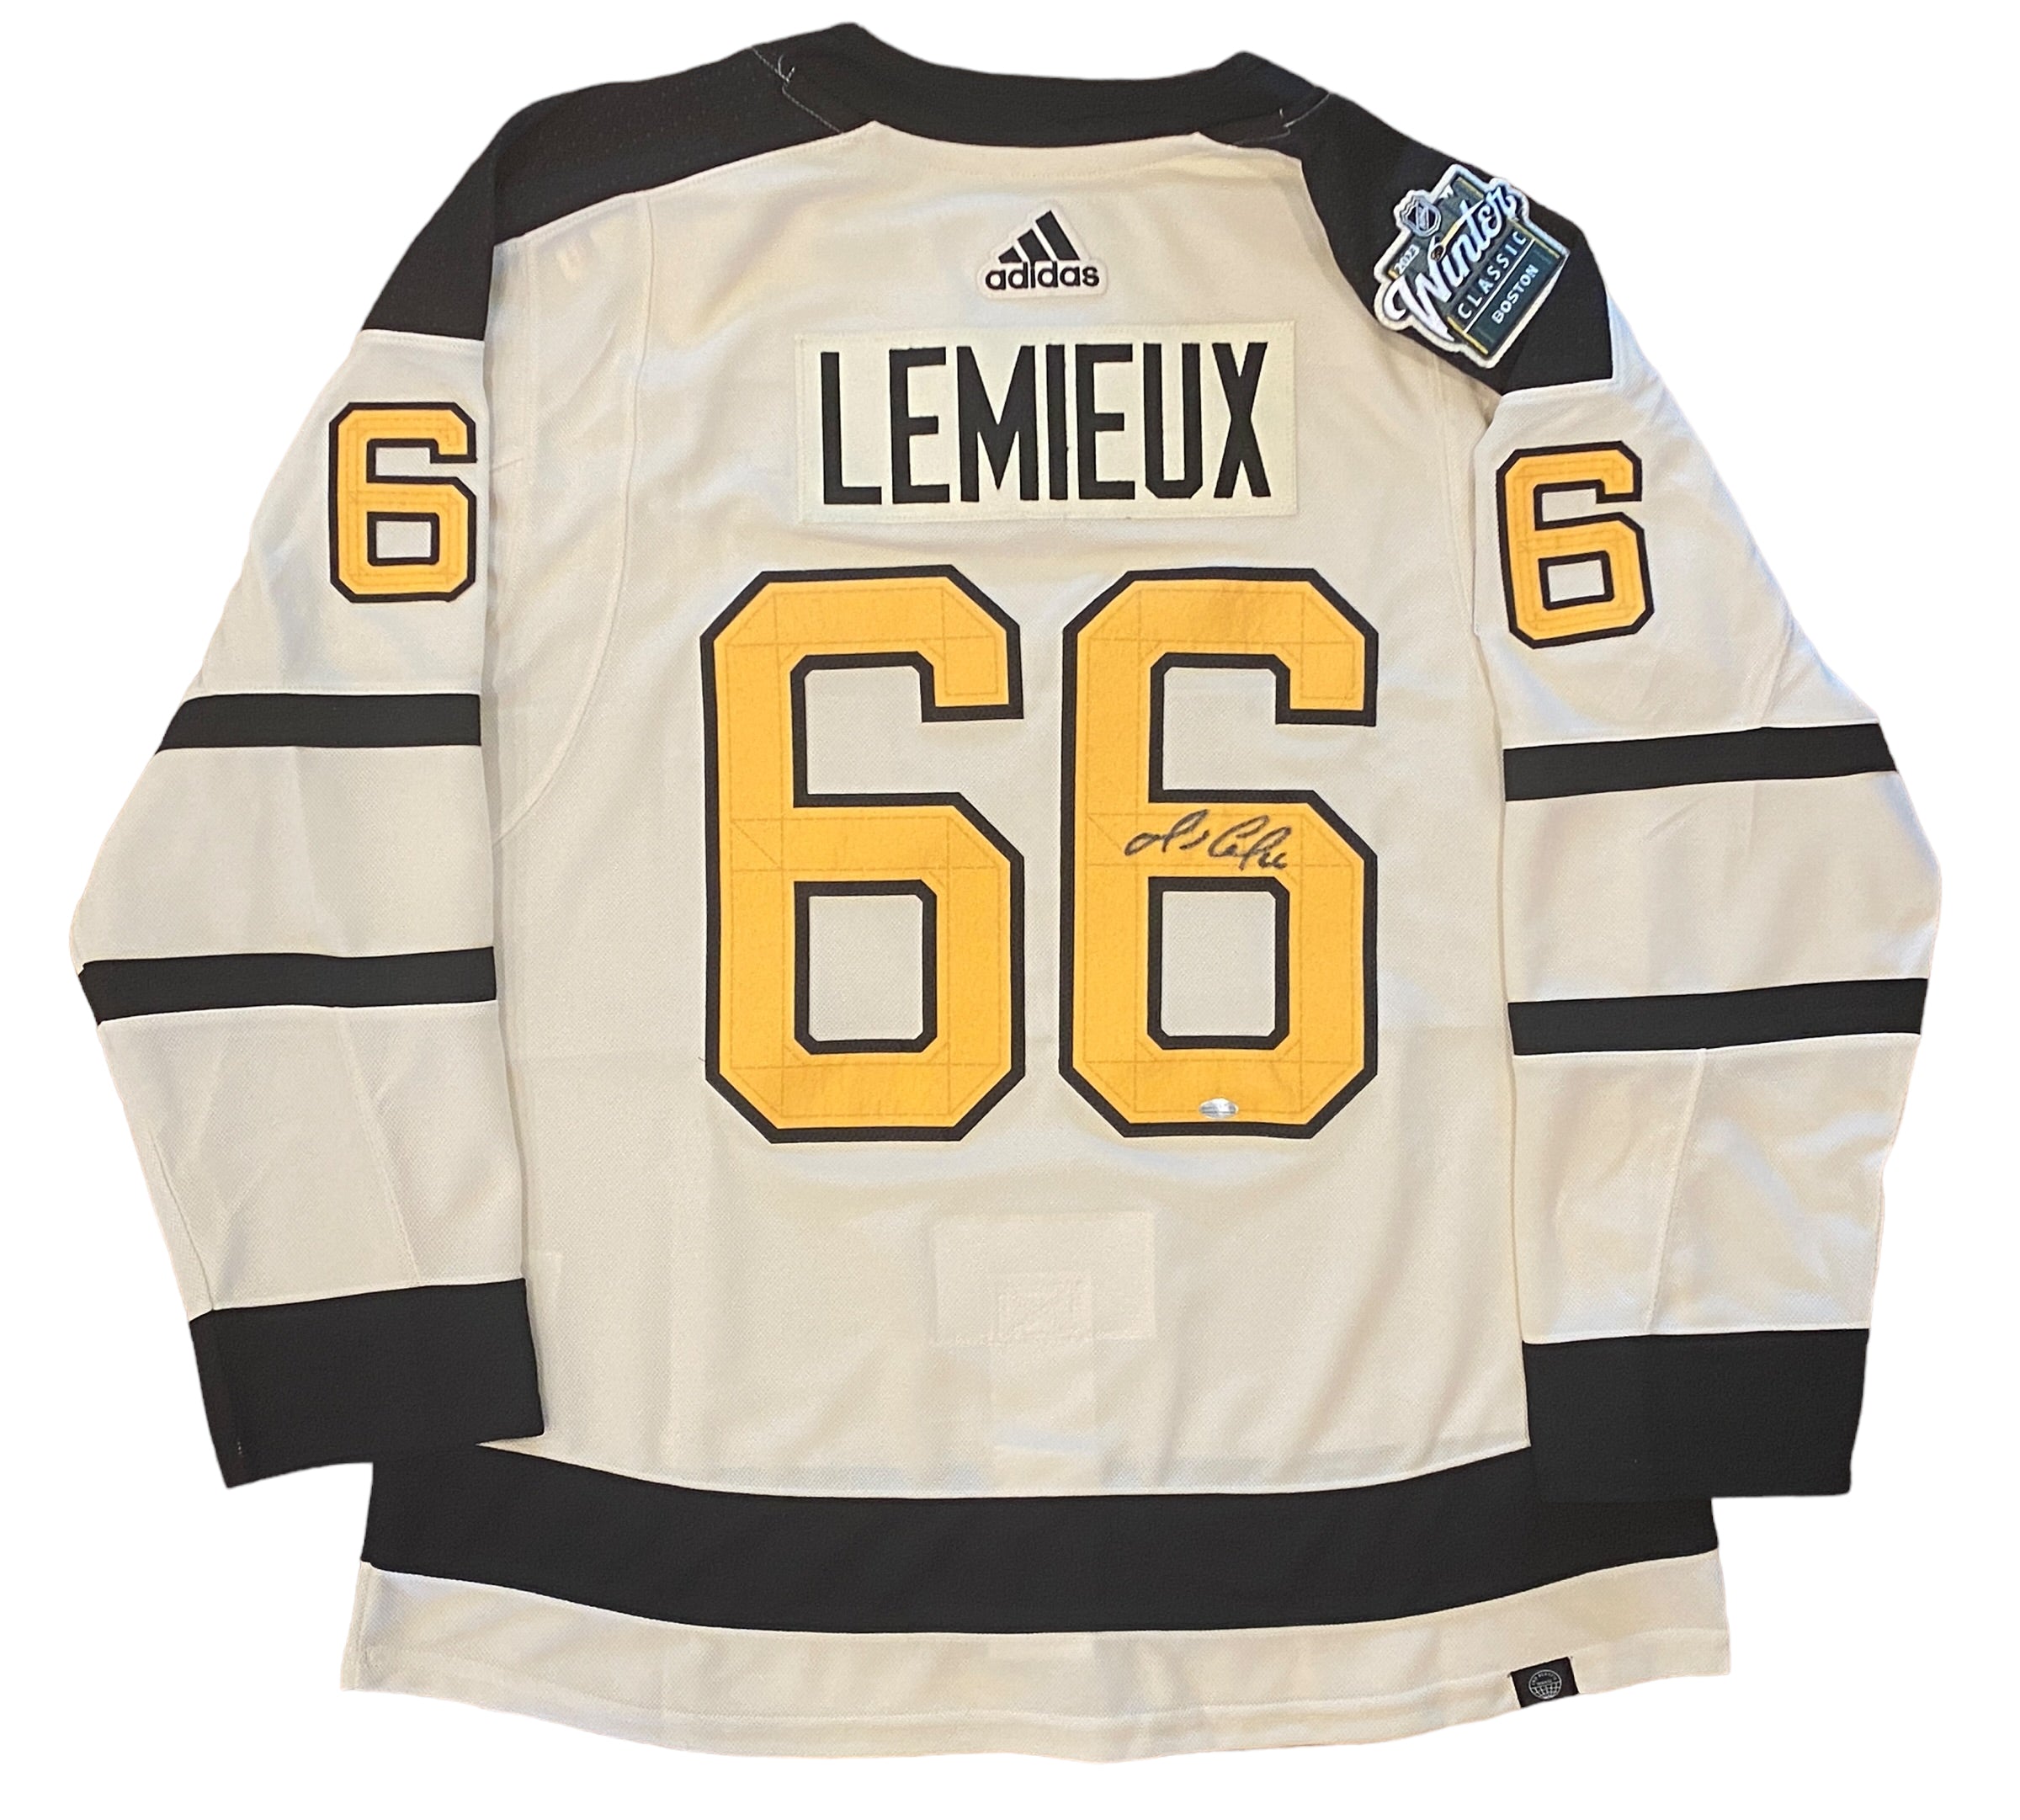 Mario LeMieux Signed, Inscribed 1985 Calder Pittsburgh Penguins Adidas Authentic Jersey